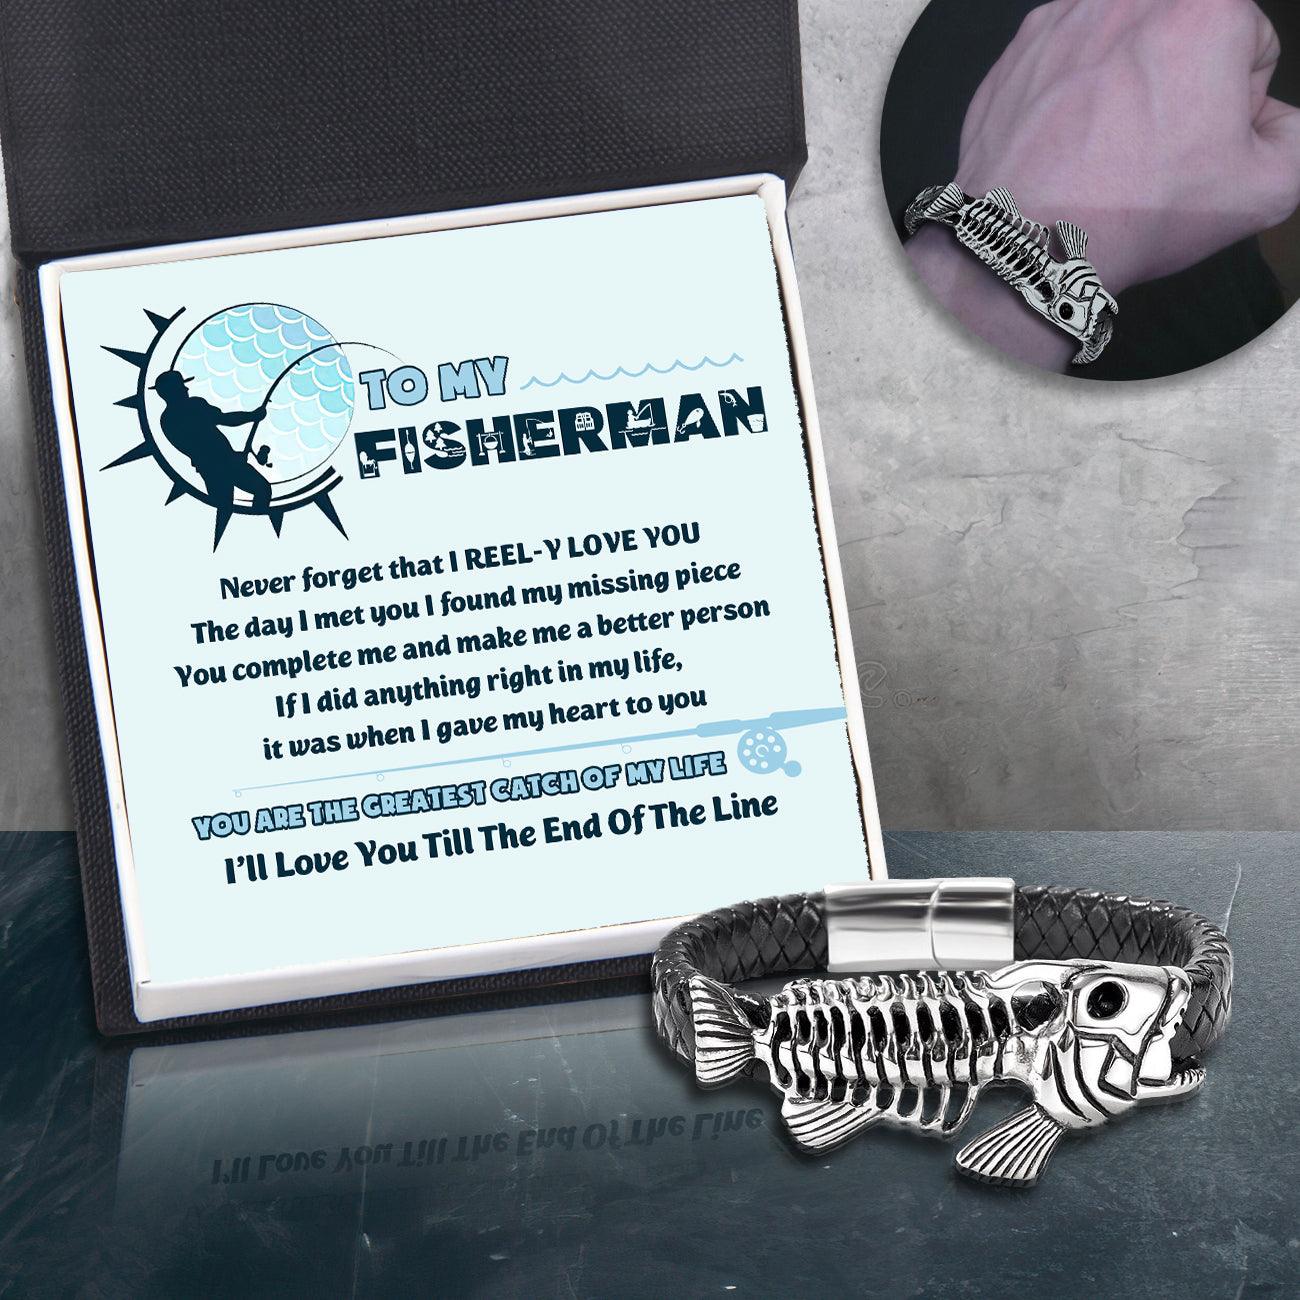 Black Leather Bracelet Fish Bone - Fishing - To My Fisherman - I Reel-y Love You - Augbzr26005 - Gifts Holder